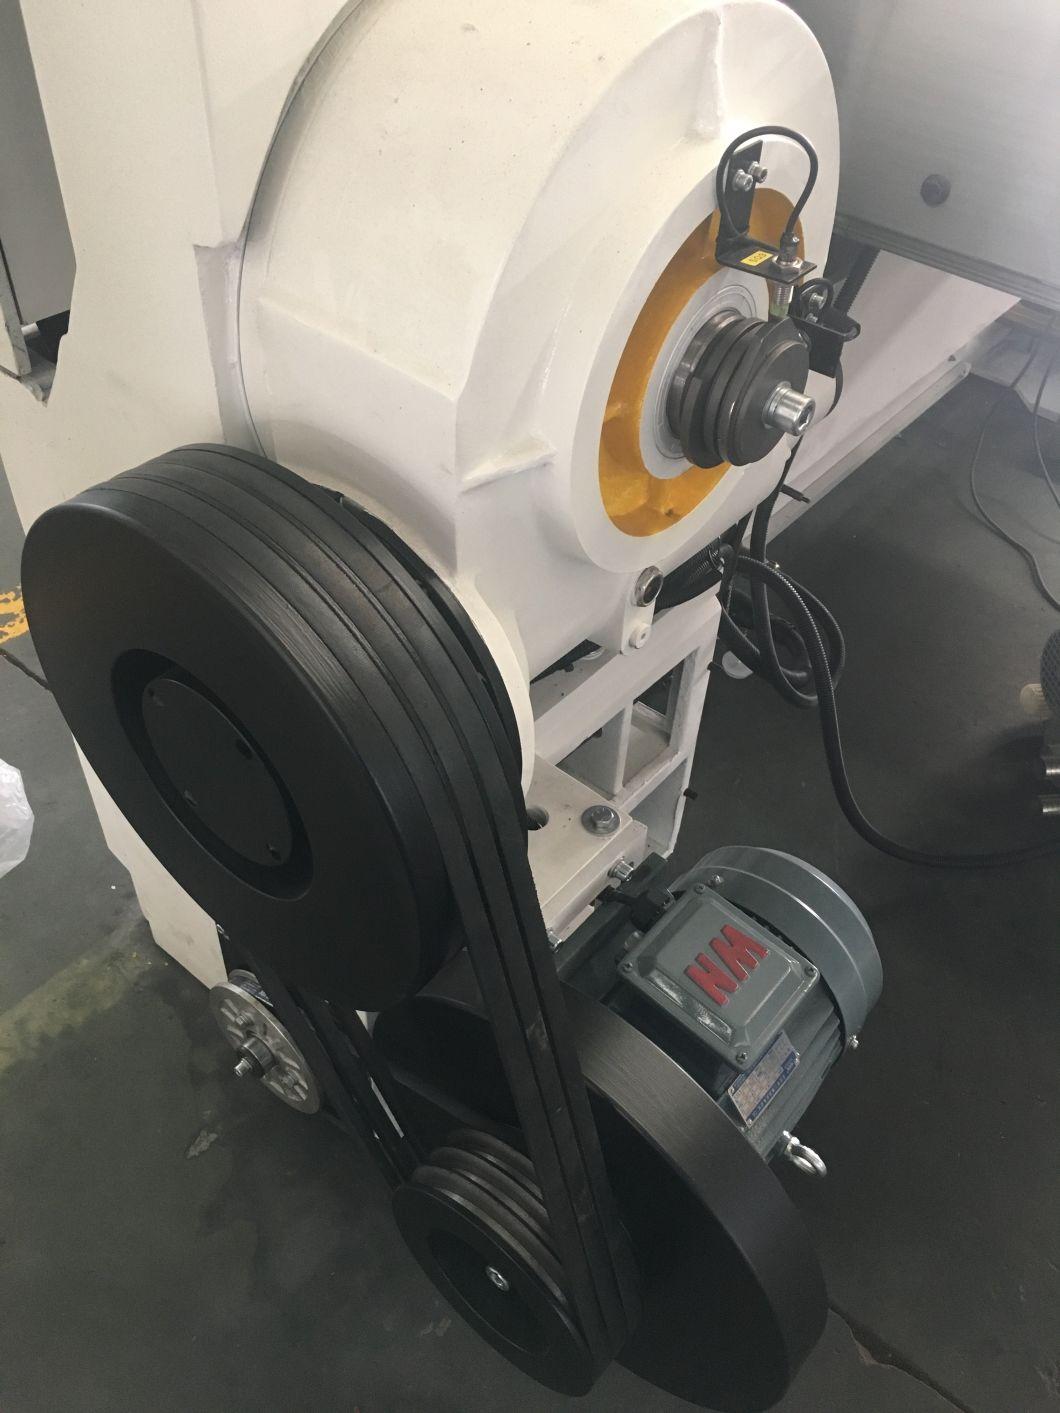 Full Automatic High Quality Ntelligent Guillotine Program Hydraulic Heavy Duty Paper Cutting Machine Professional Press